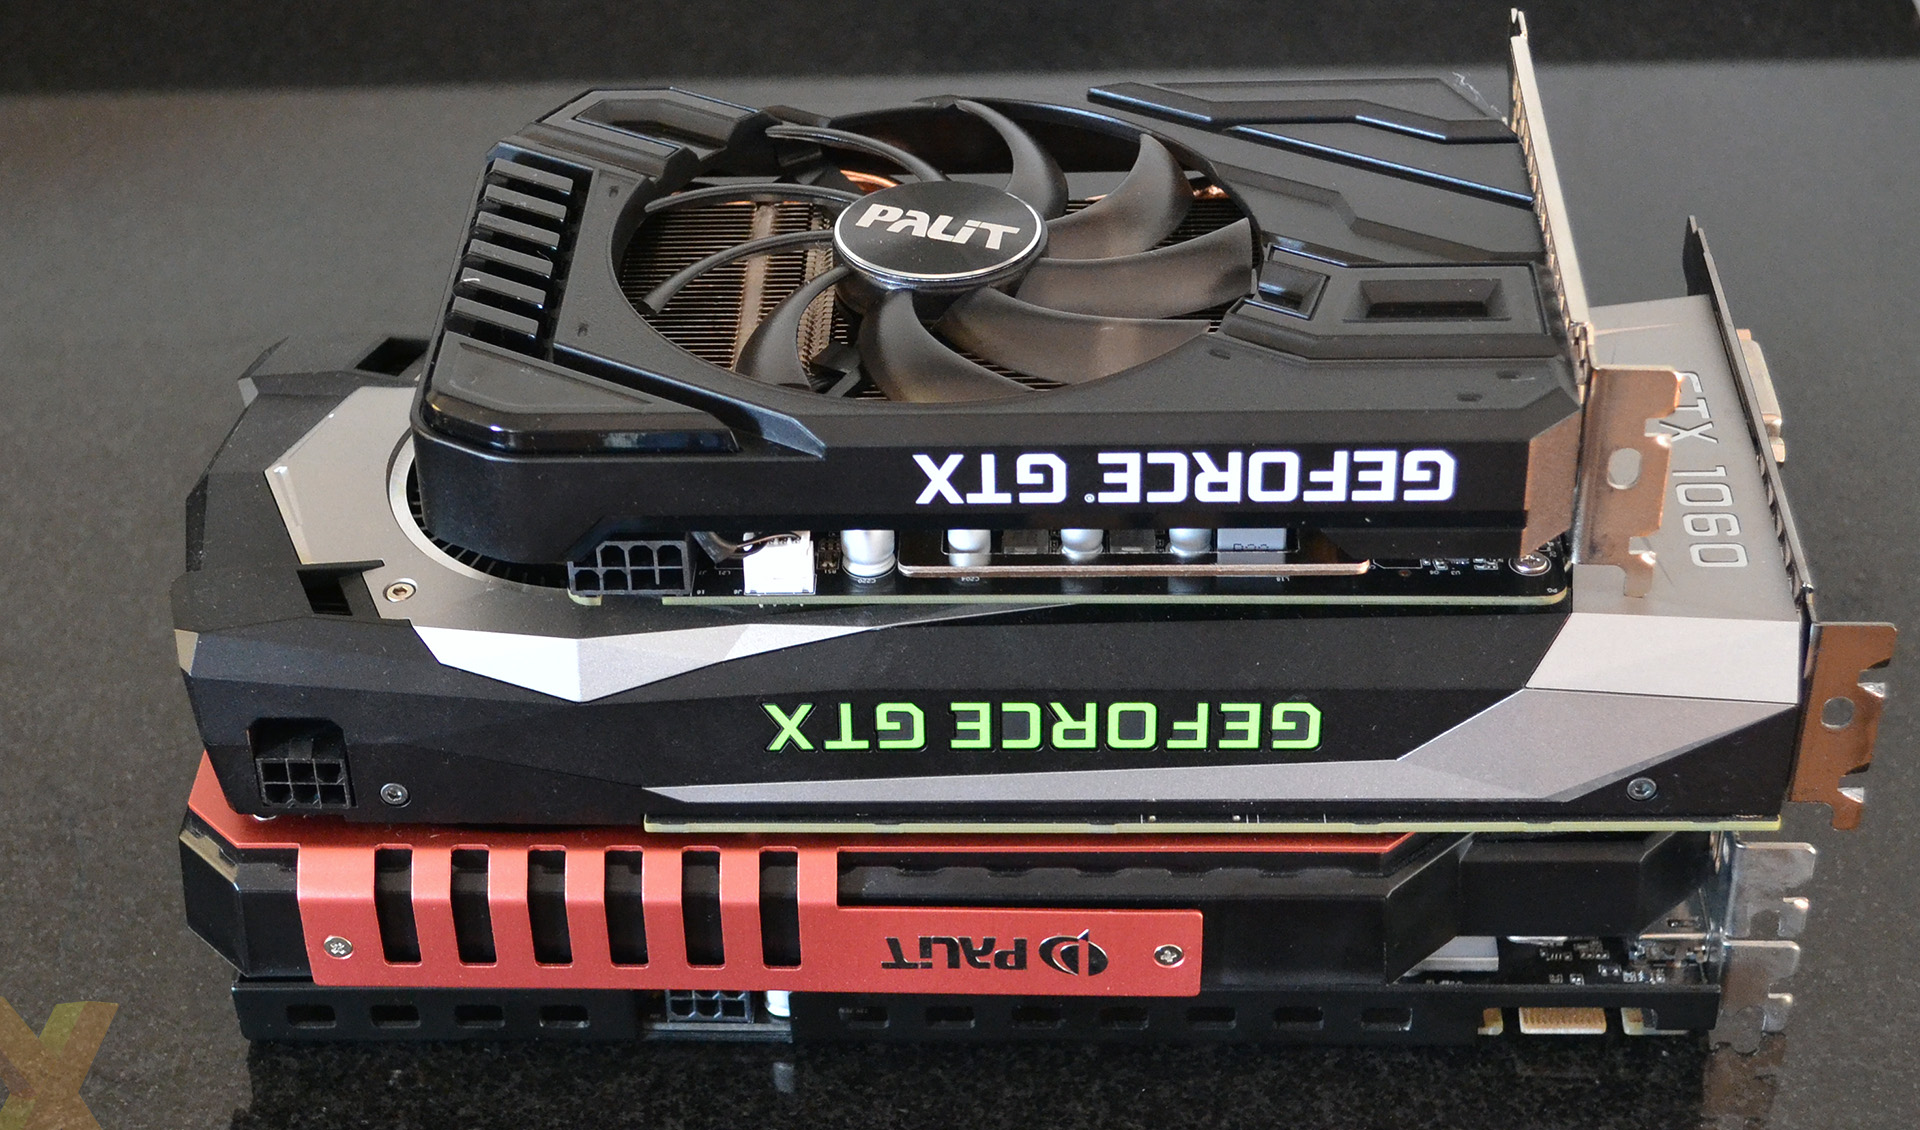 Nvidia GeForce Ti vs. GTX 1060 vs. GTX 960 - Graphics - Feature - HEXUS.net - 15